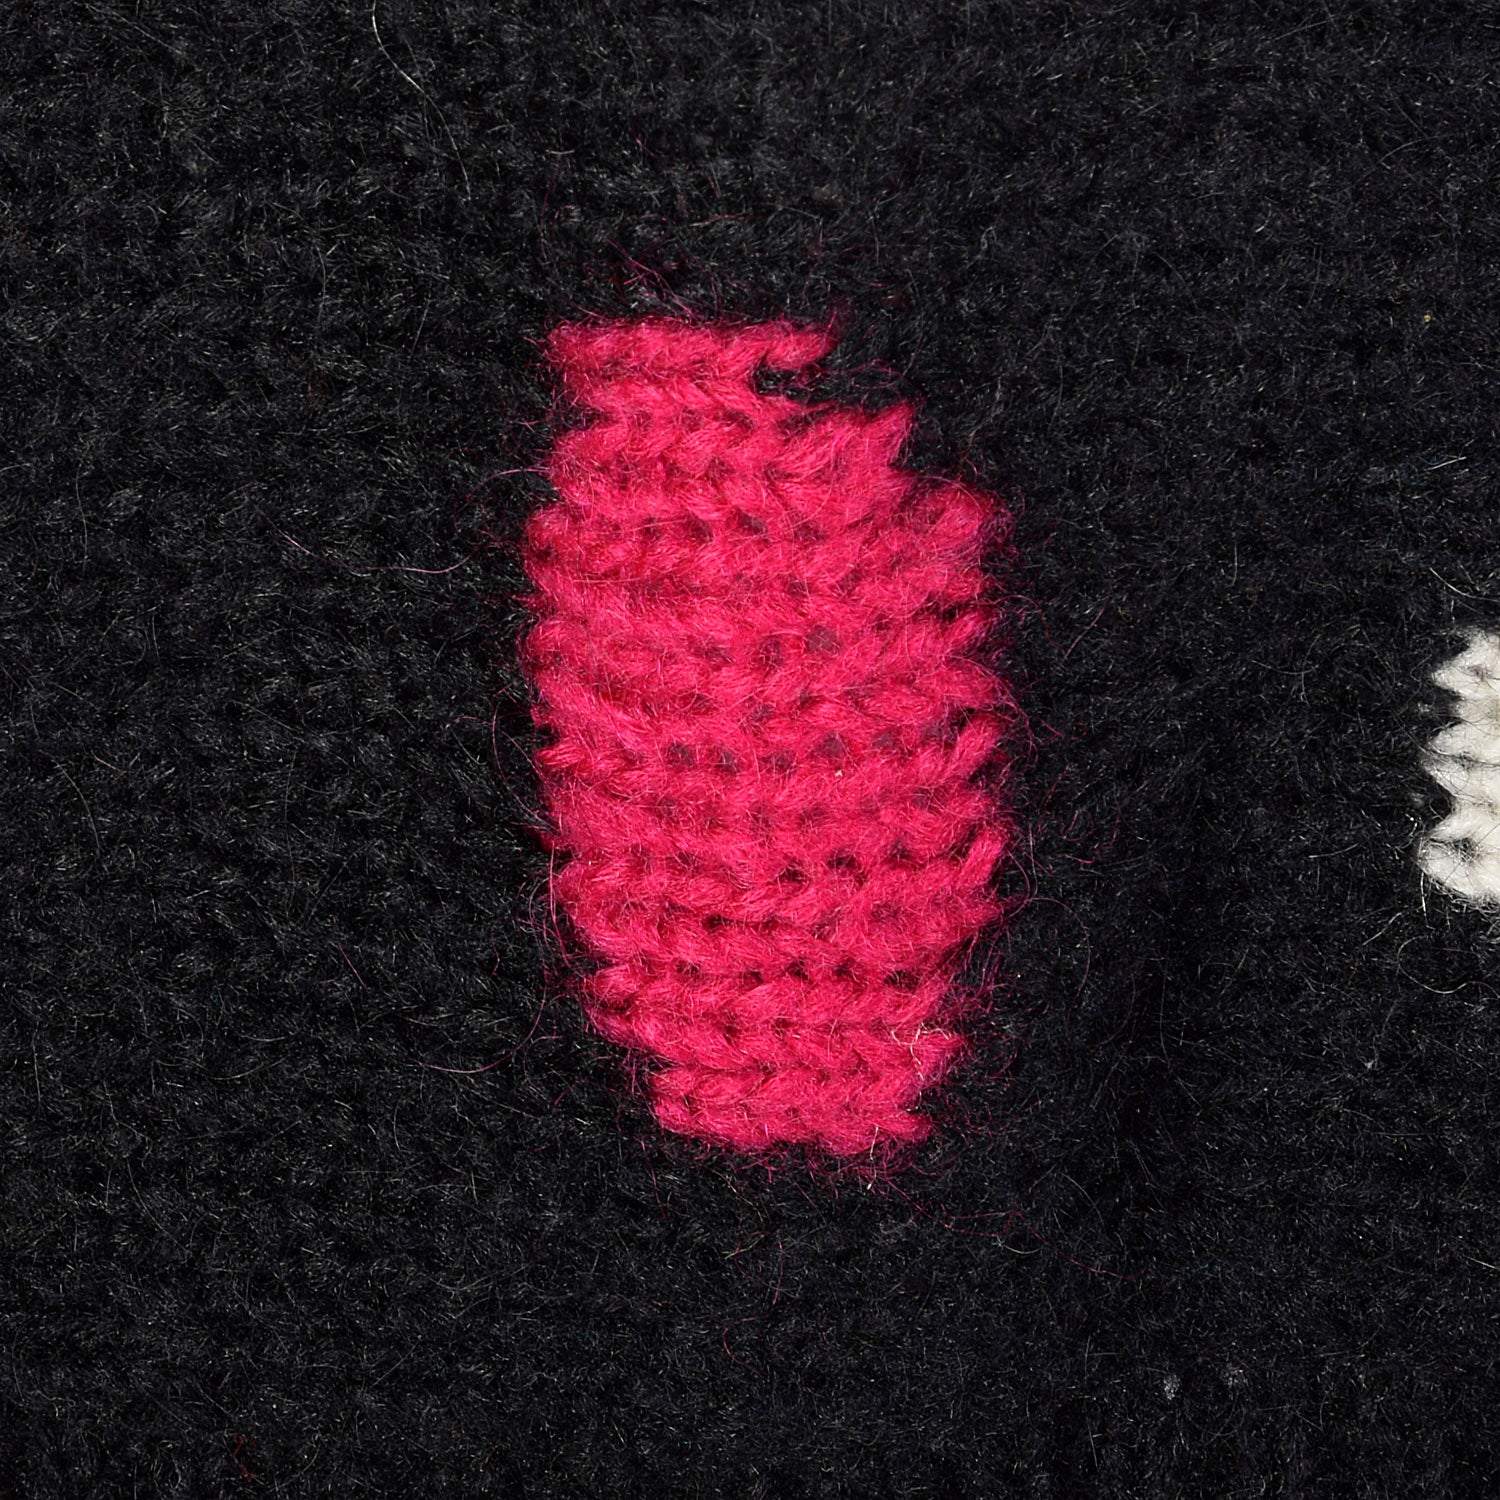 Medium Adolfo 1990s Black Geometric Sweater